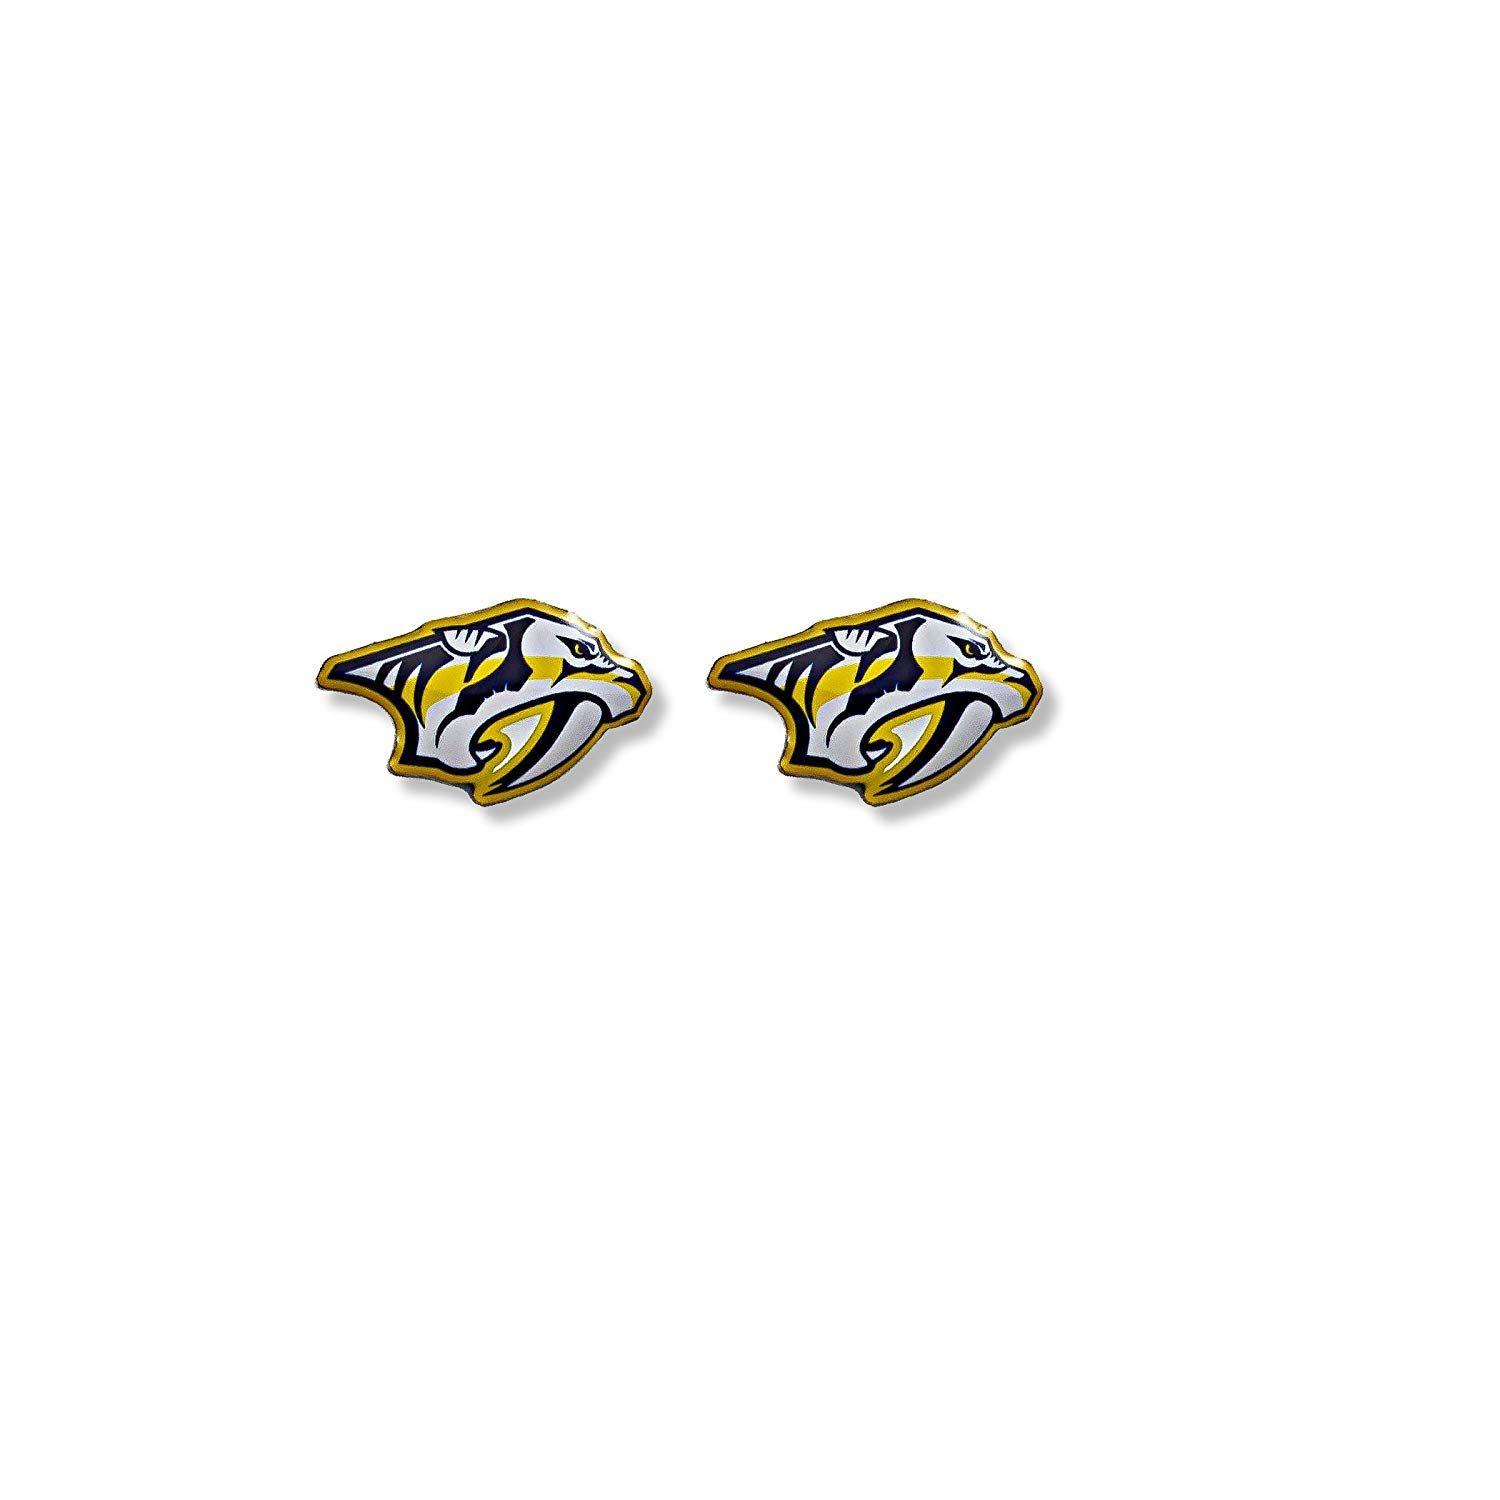 Predators Logo - Amazon.com : NHL Nashville Predators Logo Post Earrings : Sports Fan ...